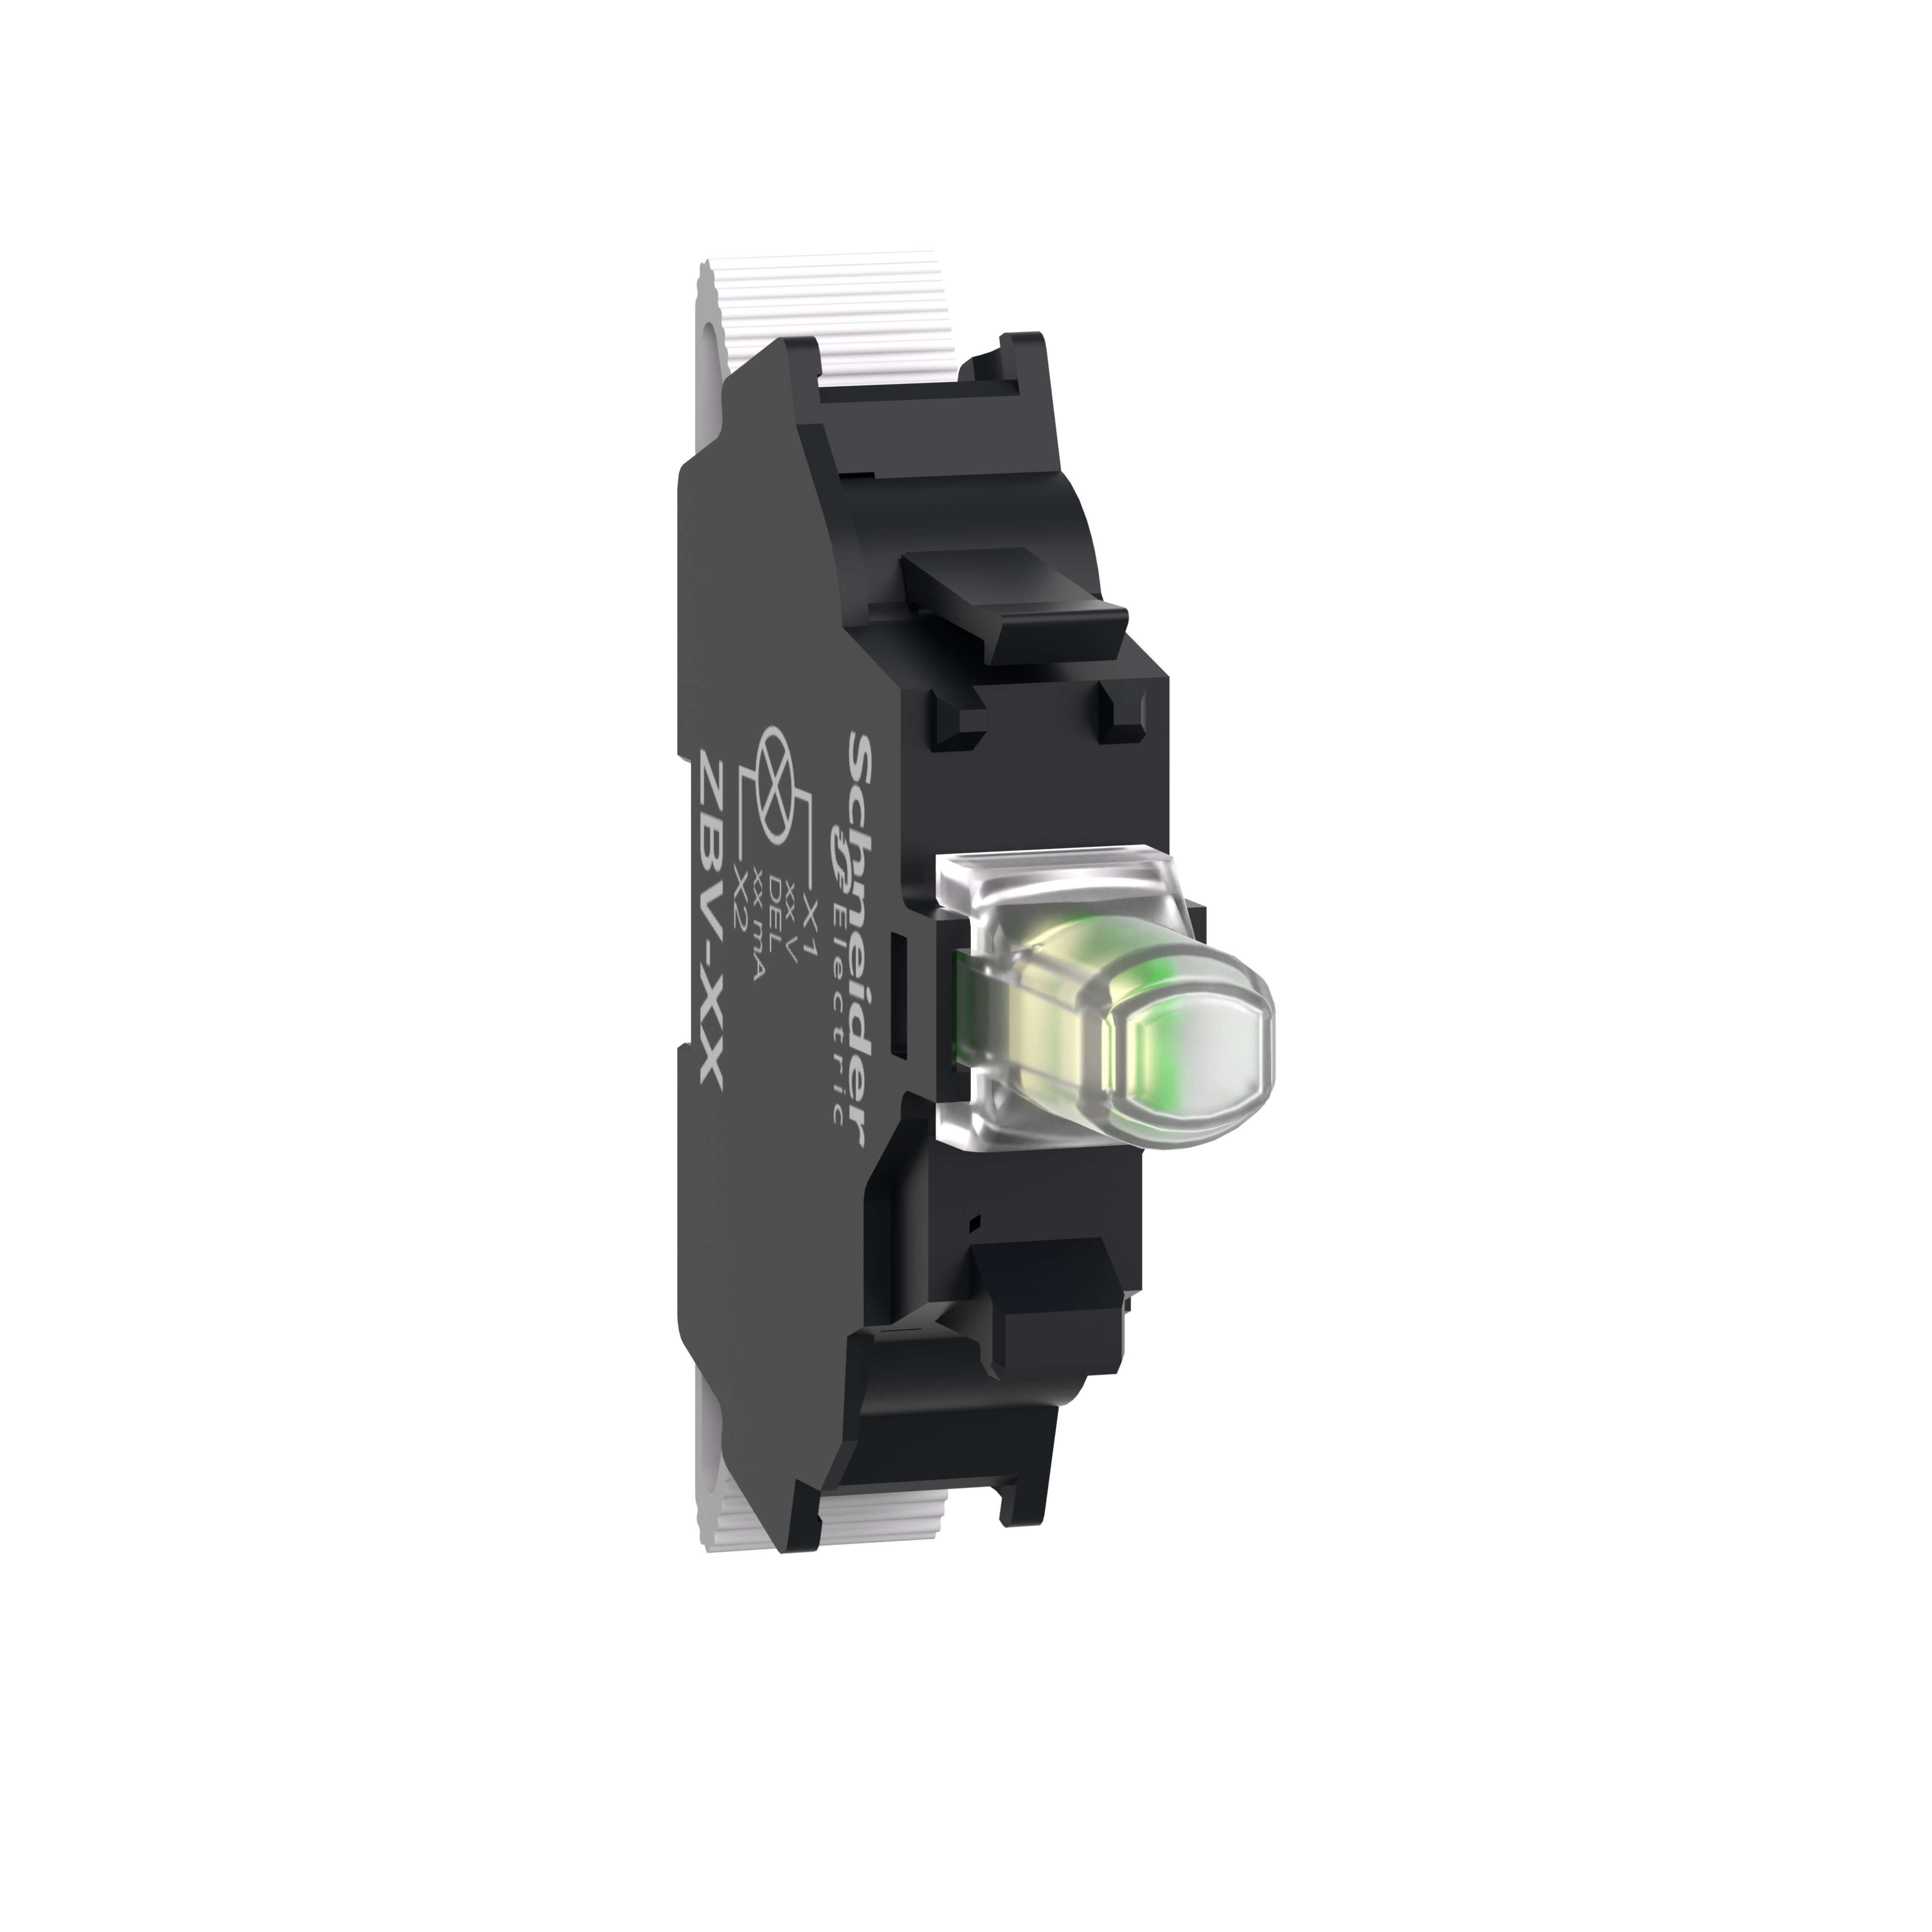 Light block, Harmony XB4, Harmony XB5, for head 22mm, universal LED, 110…120 V AC, compact push in terminals